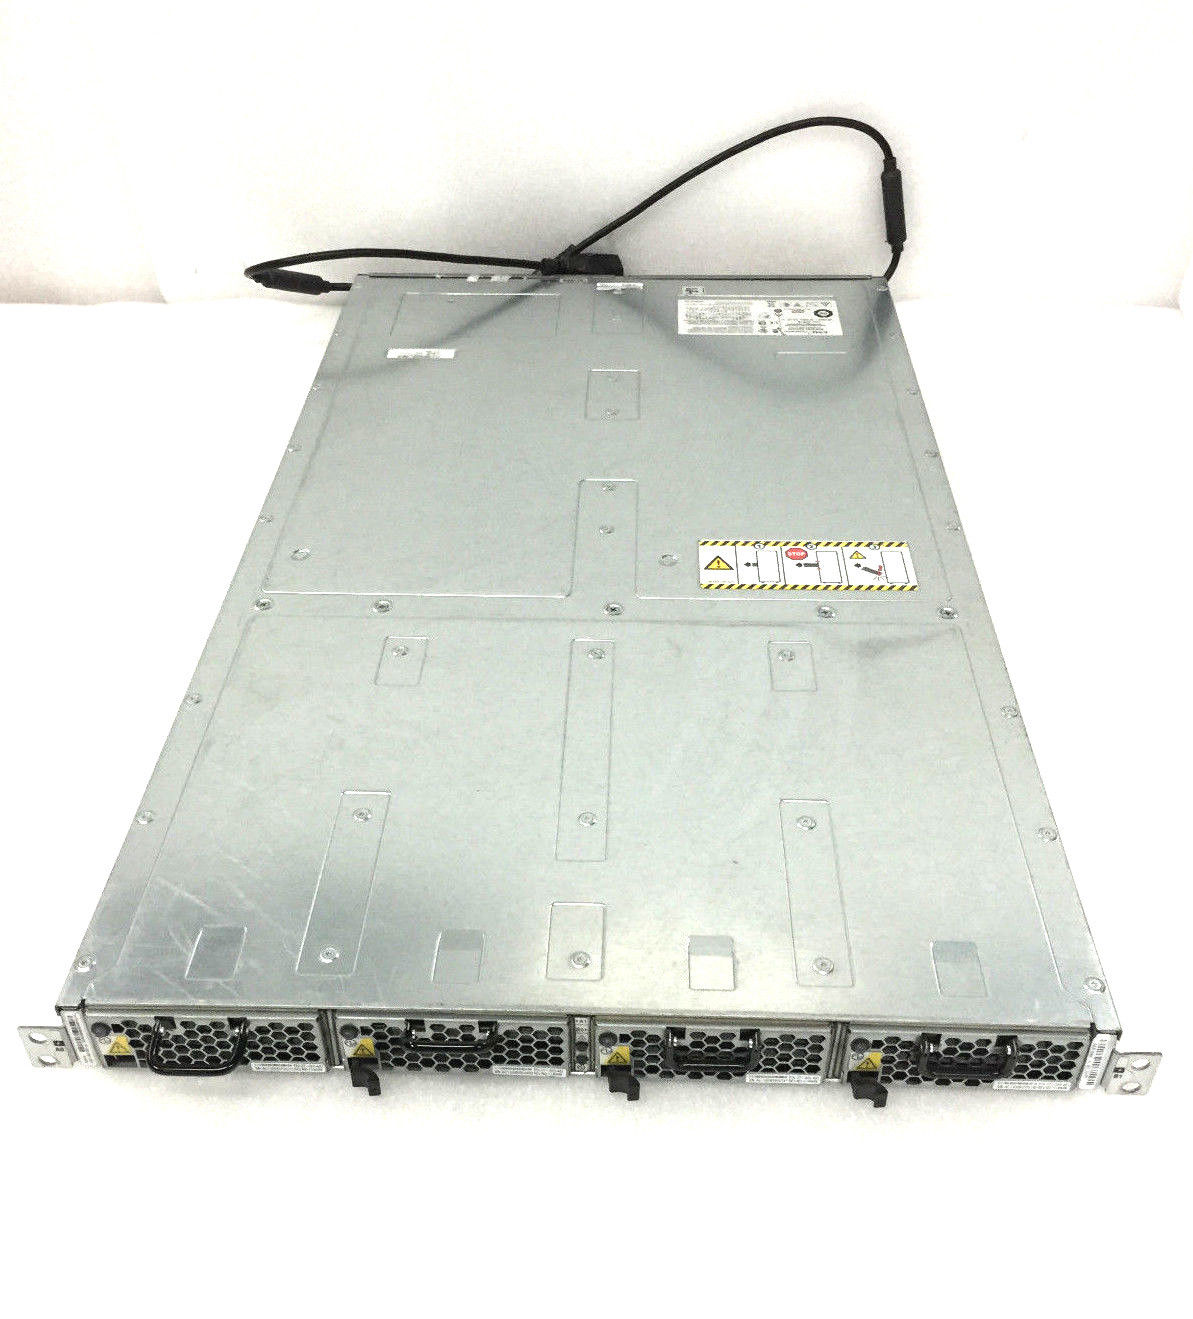 Dell EMC Spe-N Nx4-2C-A-Fd SCSI Network Storage Controller (GJ765)